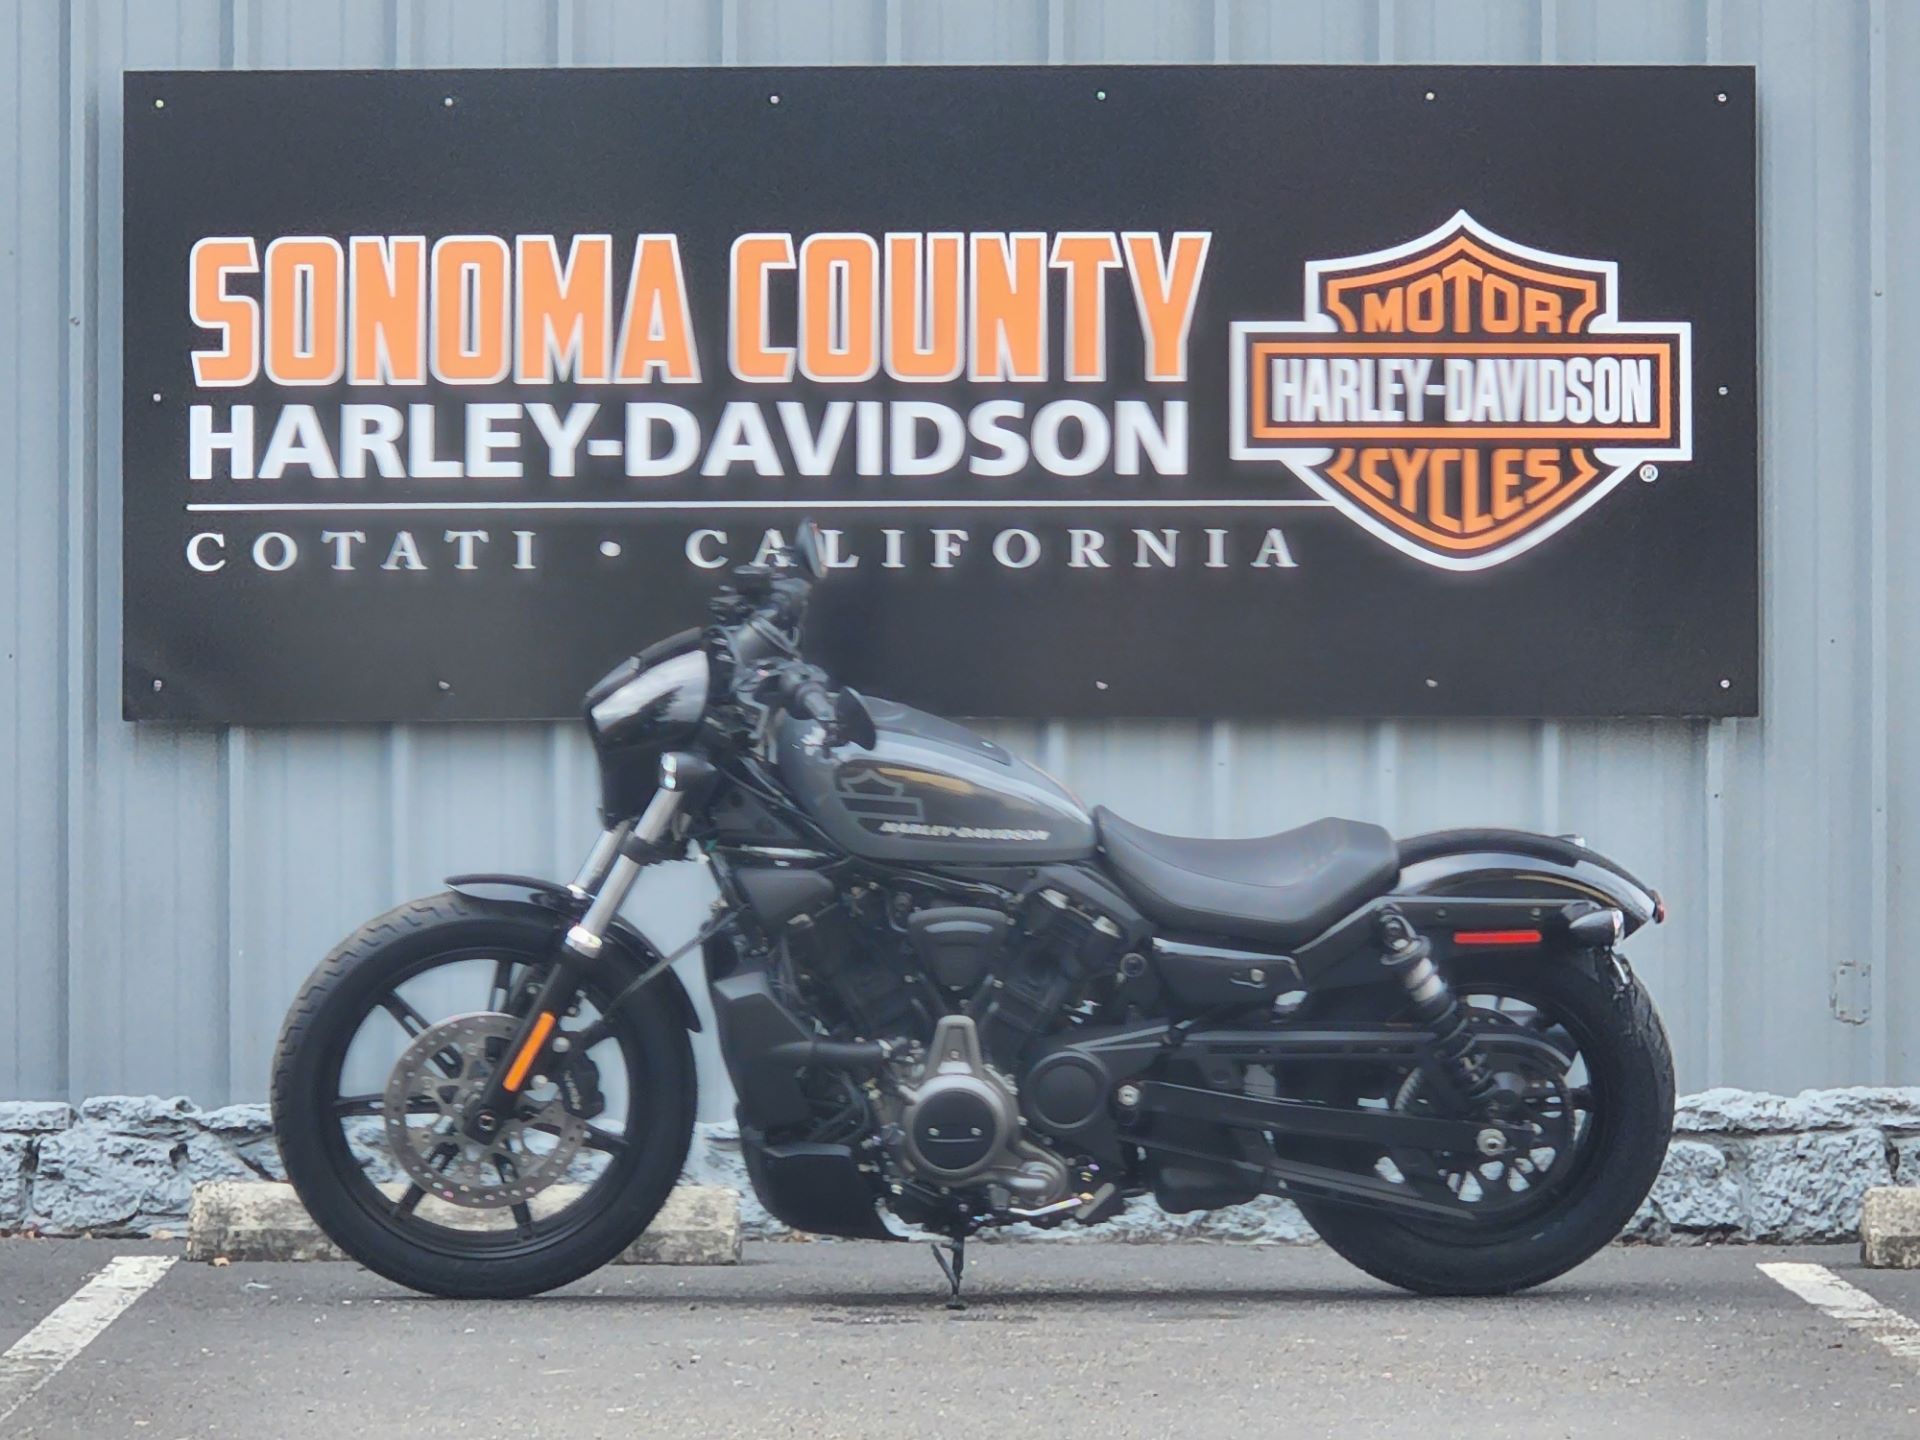 2022 Harley-Davidson Nightster™ in Cotati, California - Photo 3